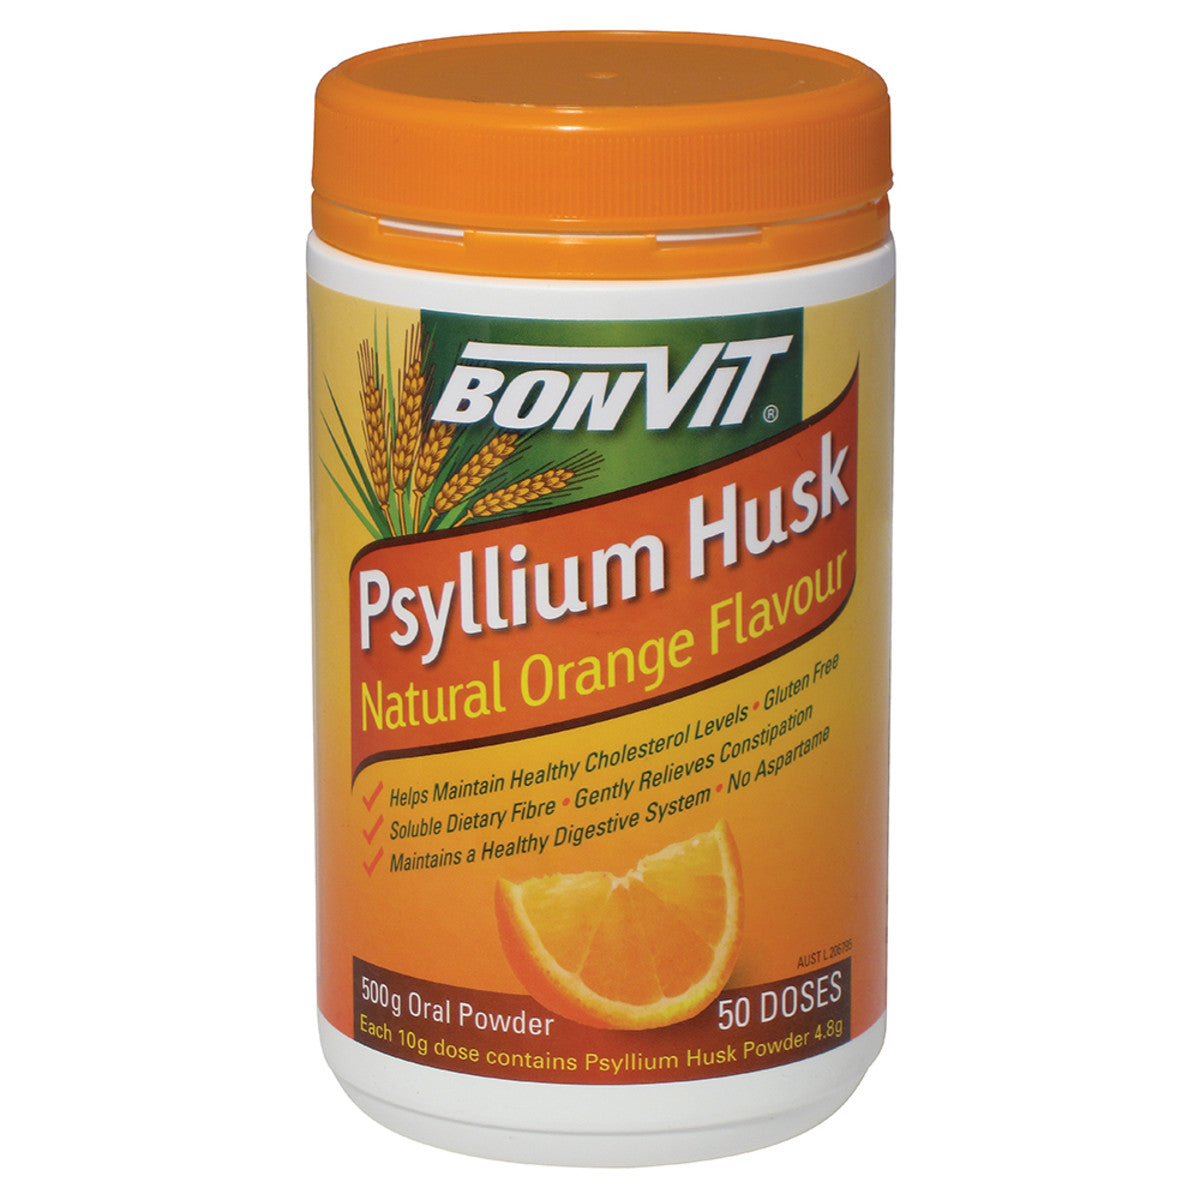 Bonvit - Psyllium Husk Orange